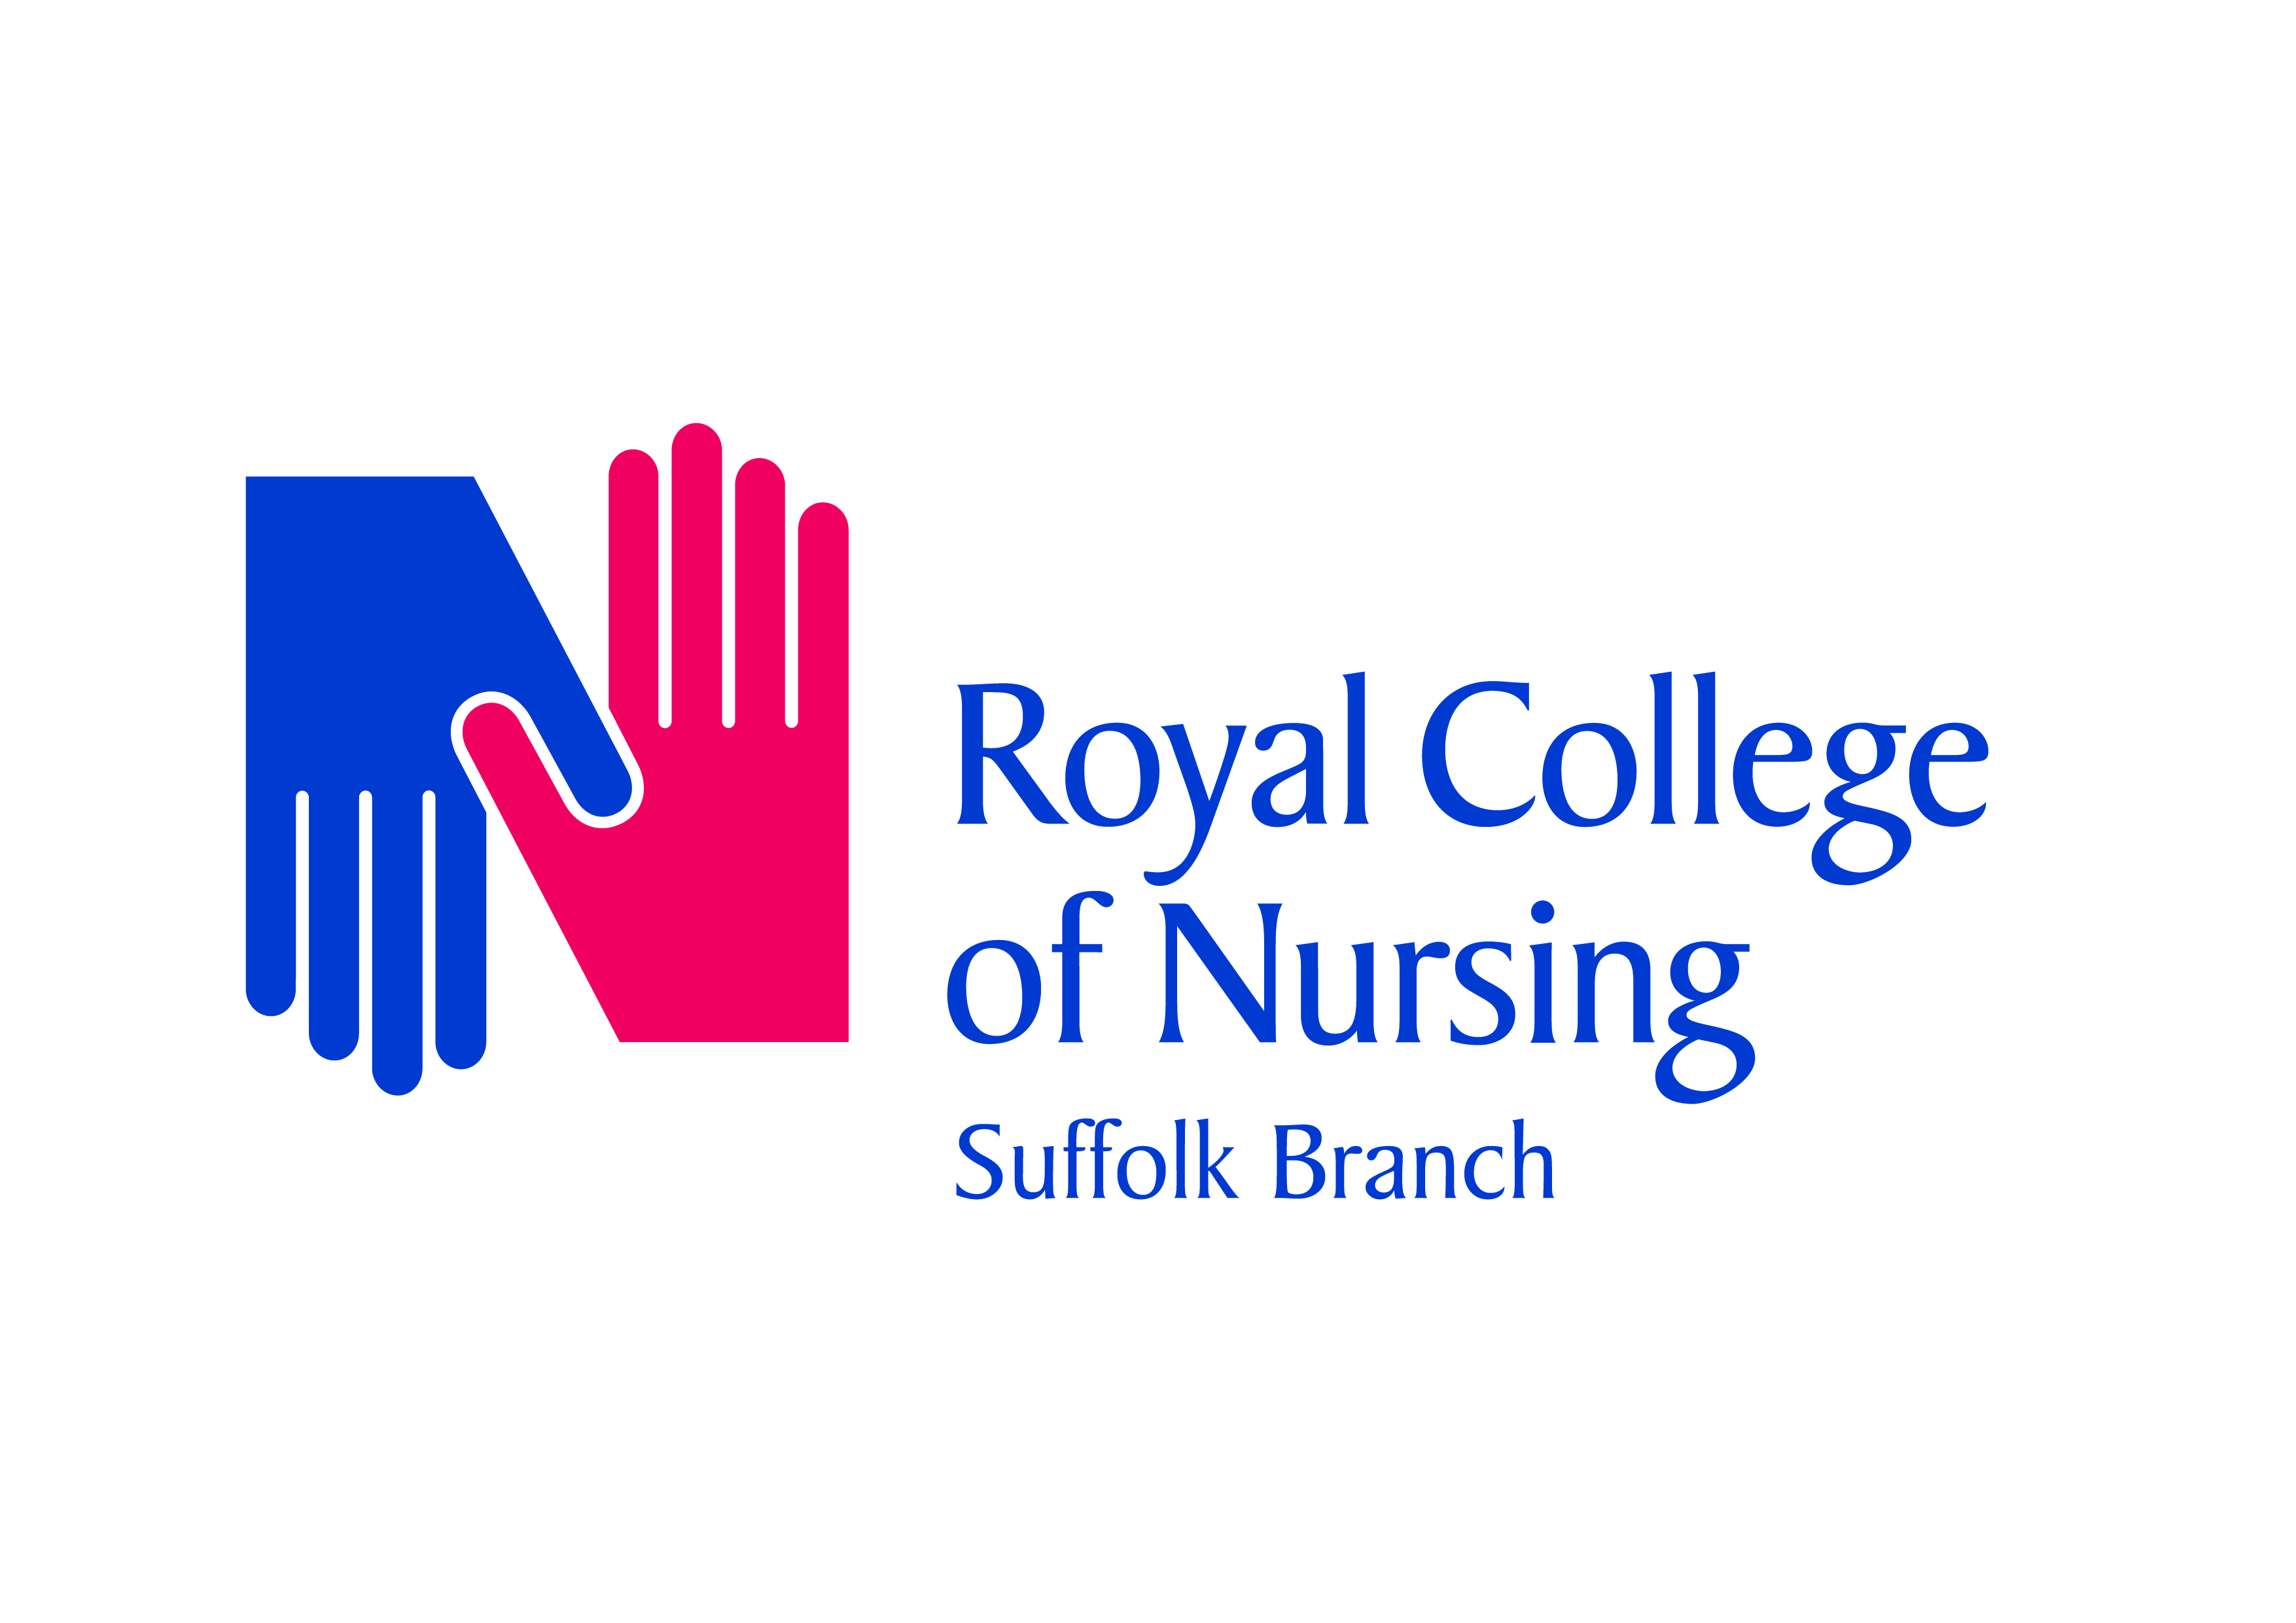 RCN Suffolk branch logo